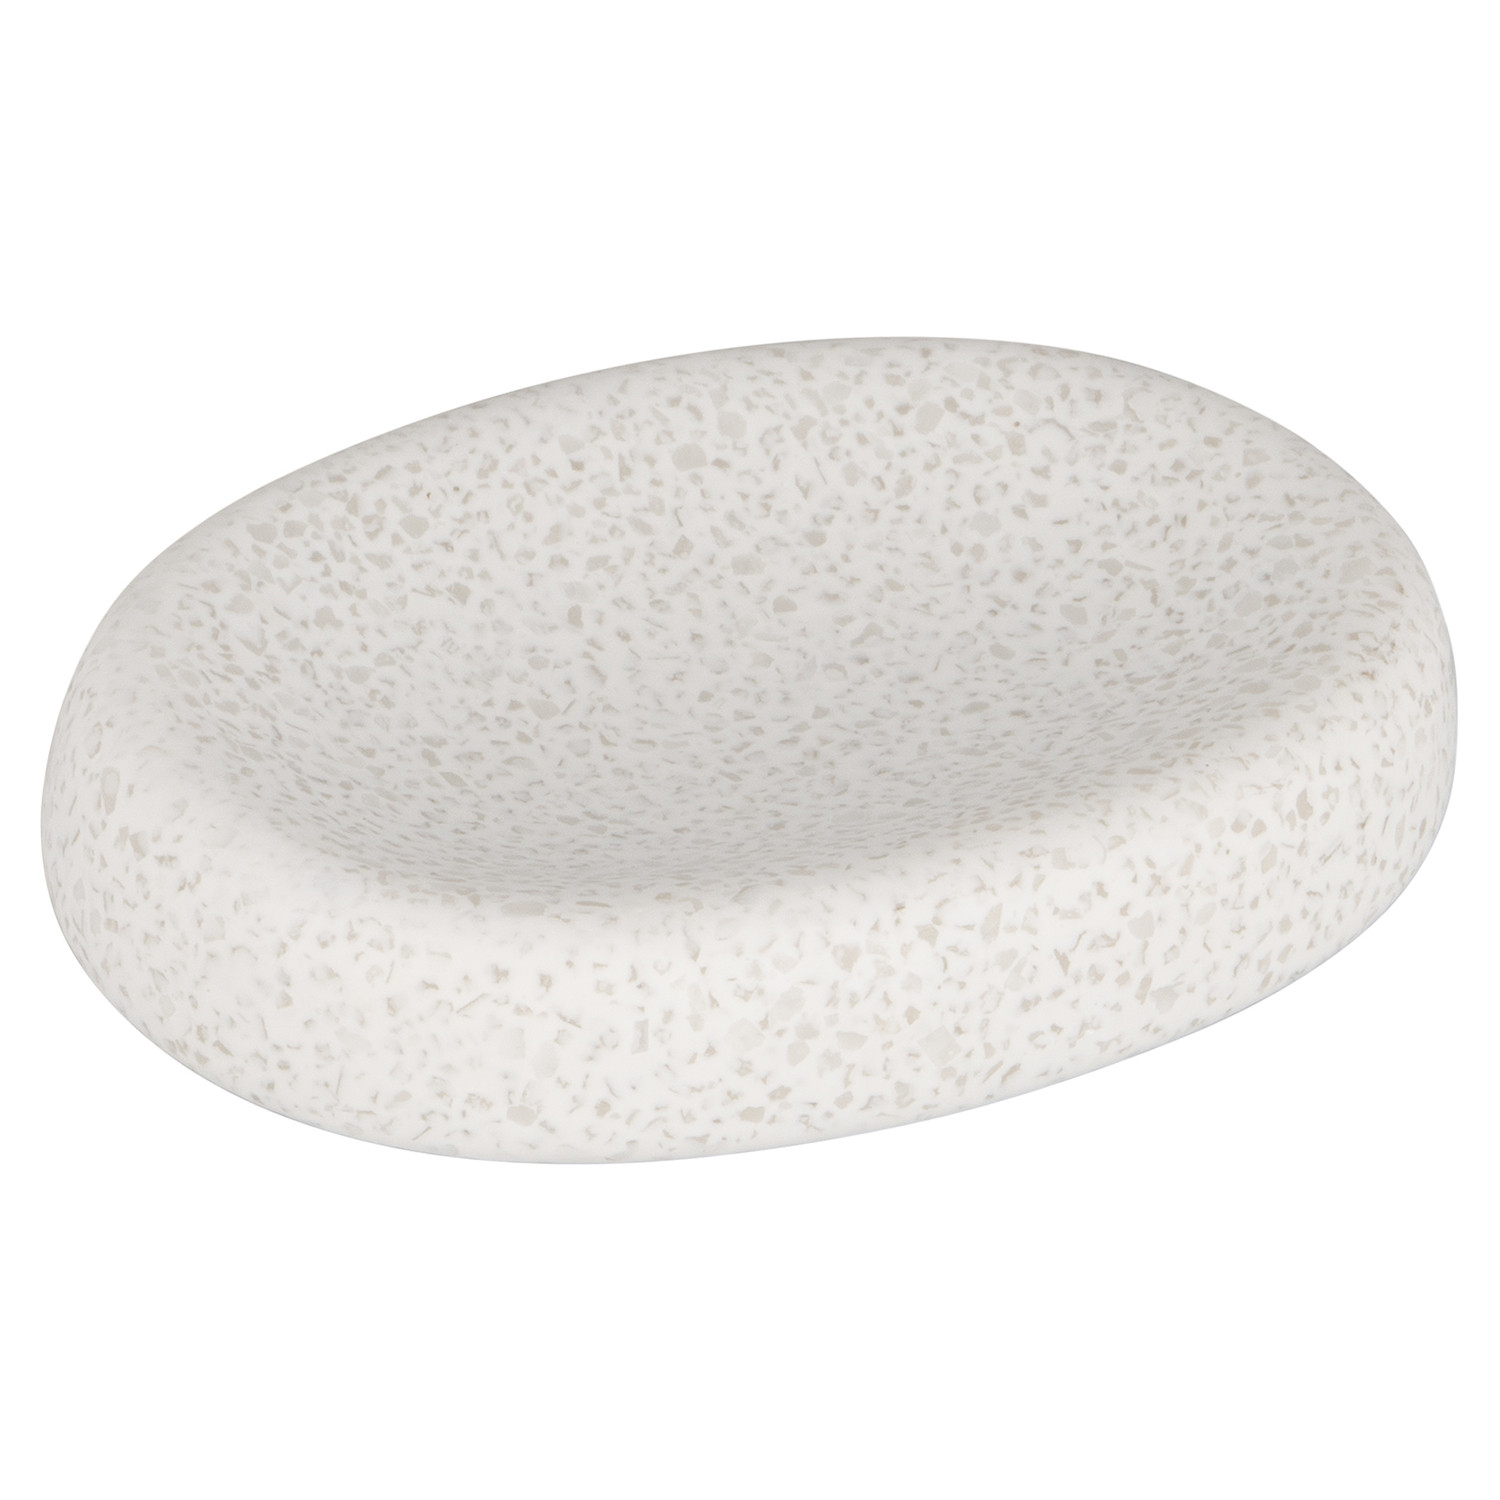 Caliza Soap Dish - White Image 1